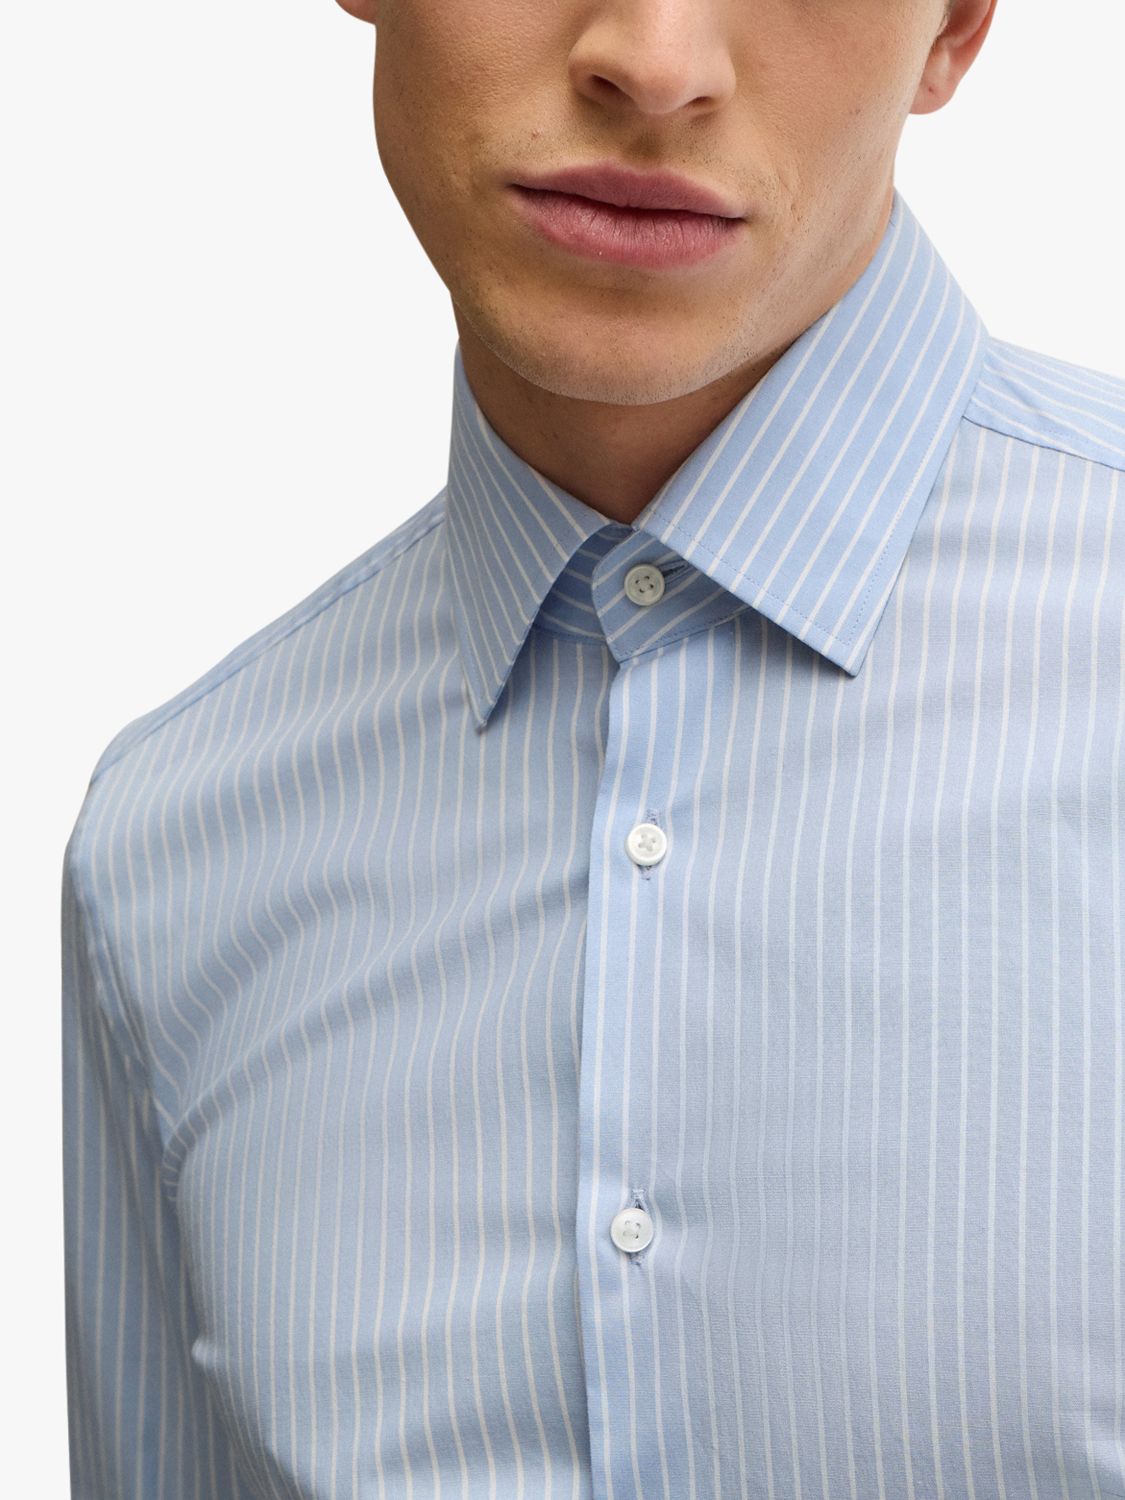 BOSS Hank Slim Fit Pinstripe Shirt, Pastel Blue/White, 15